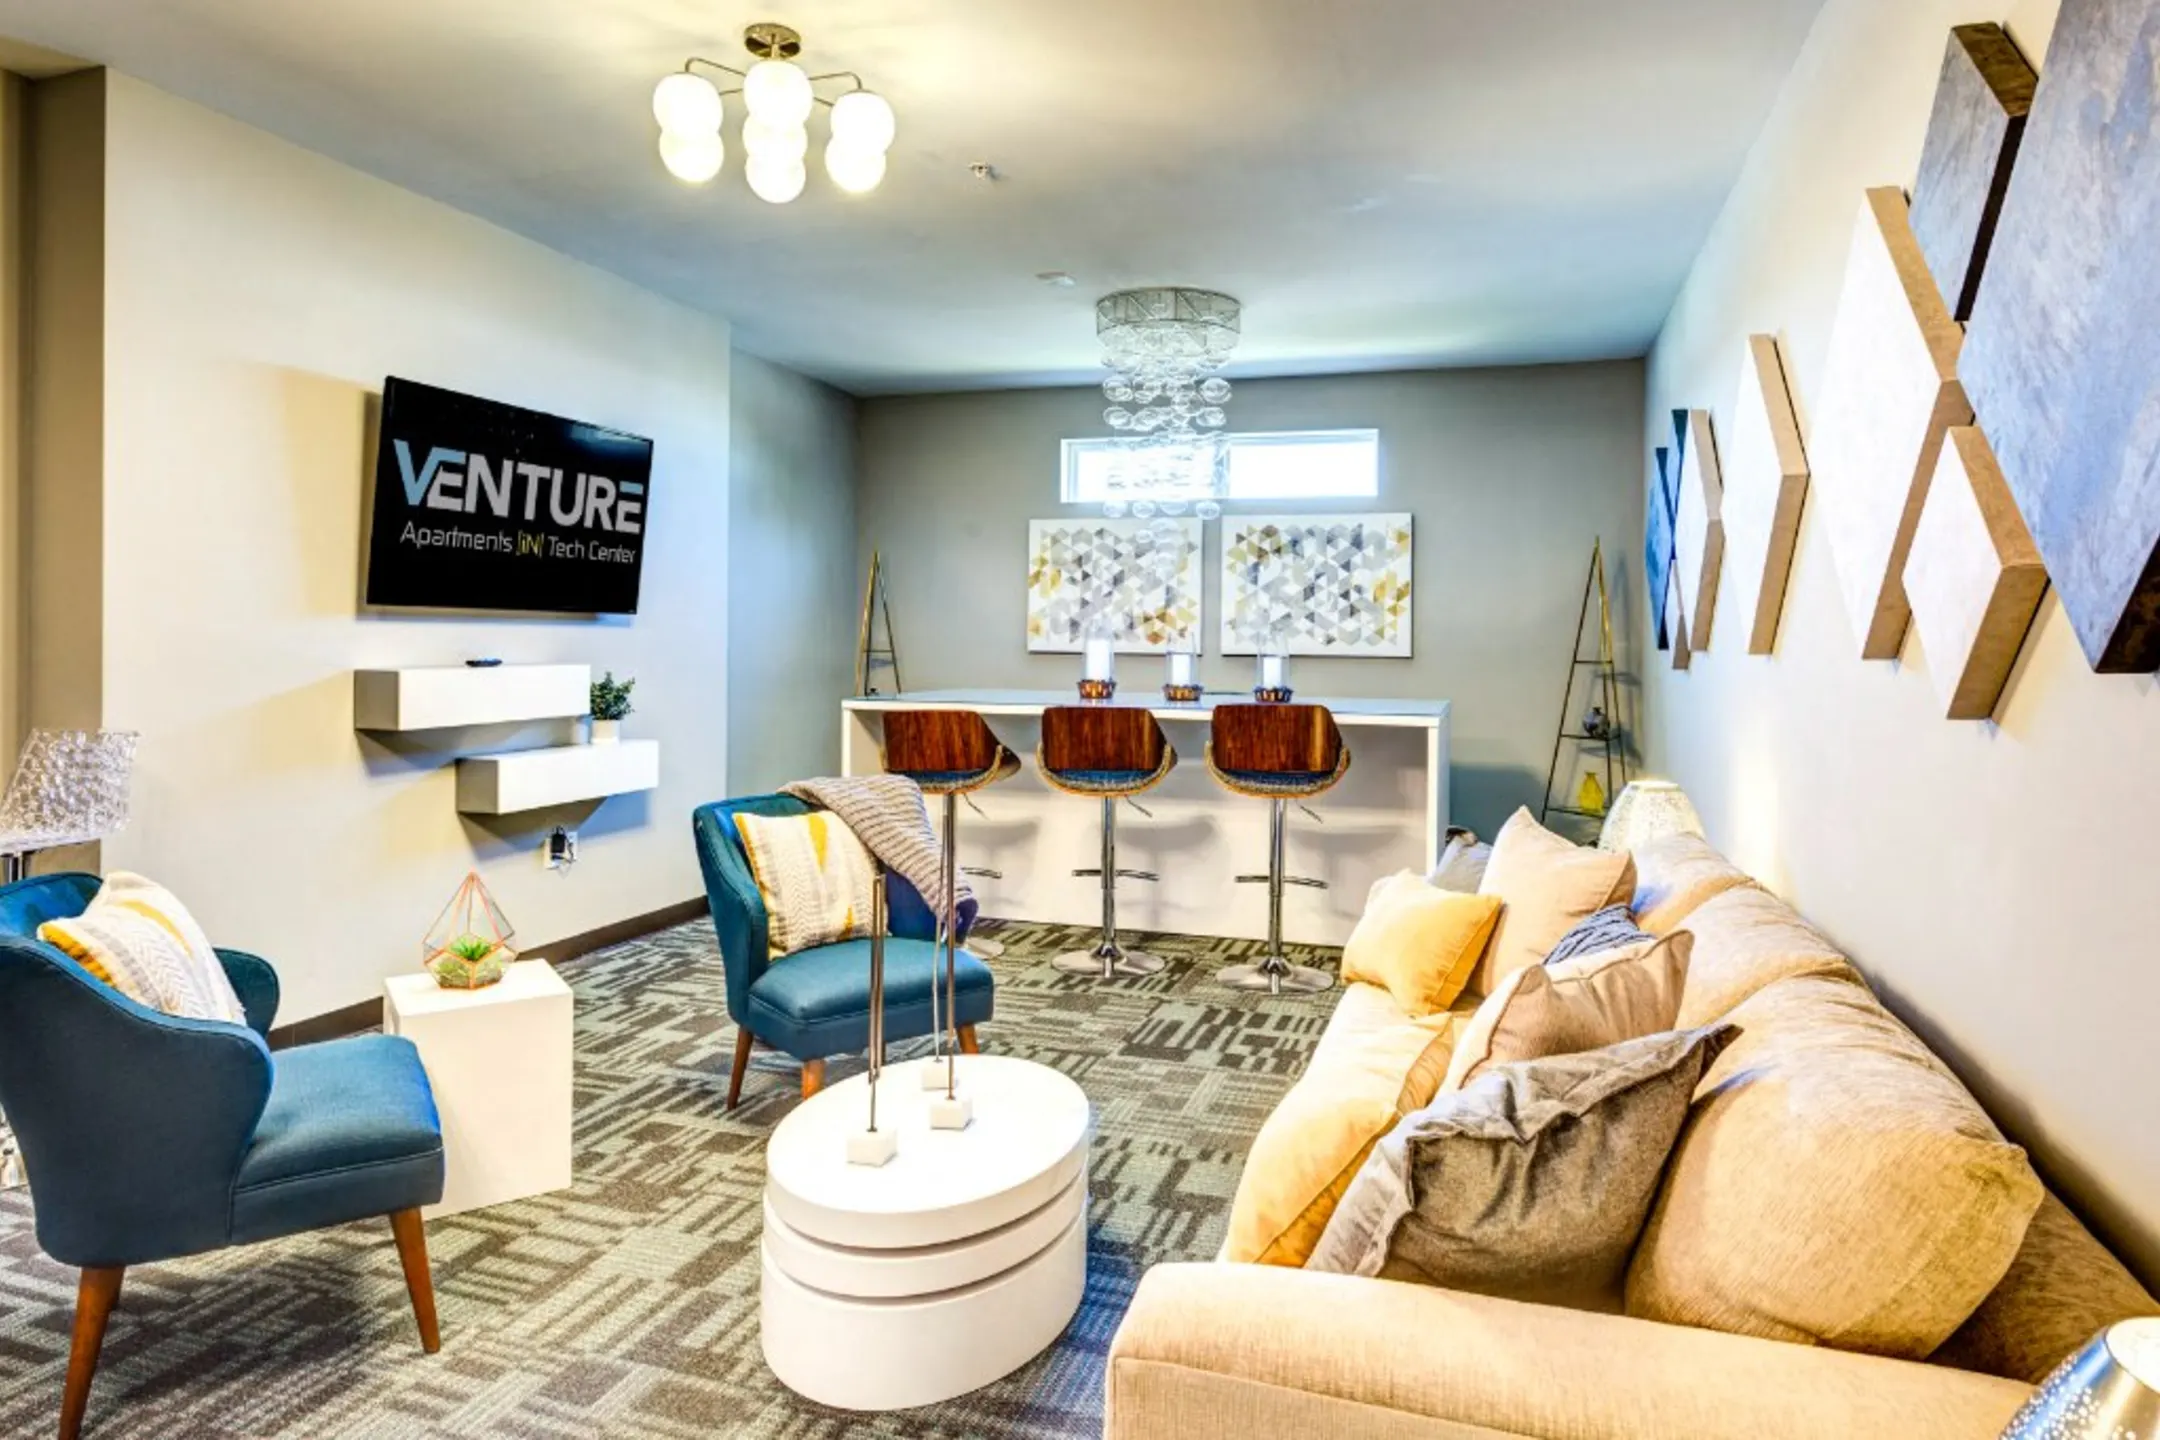 Living Room - Venture Apartments iN Tech Center - Newport News, VA